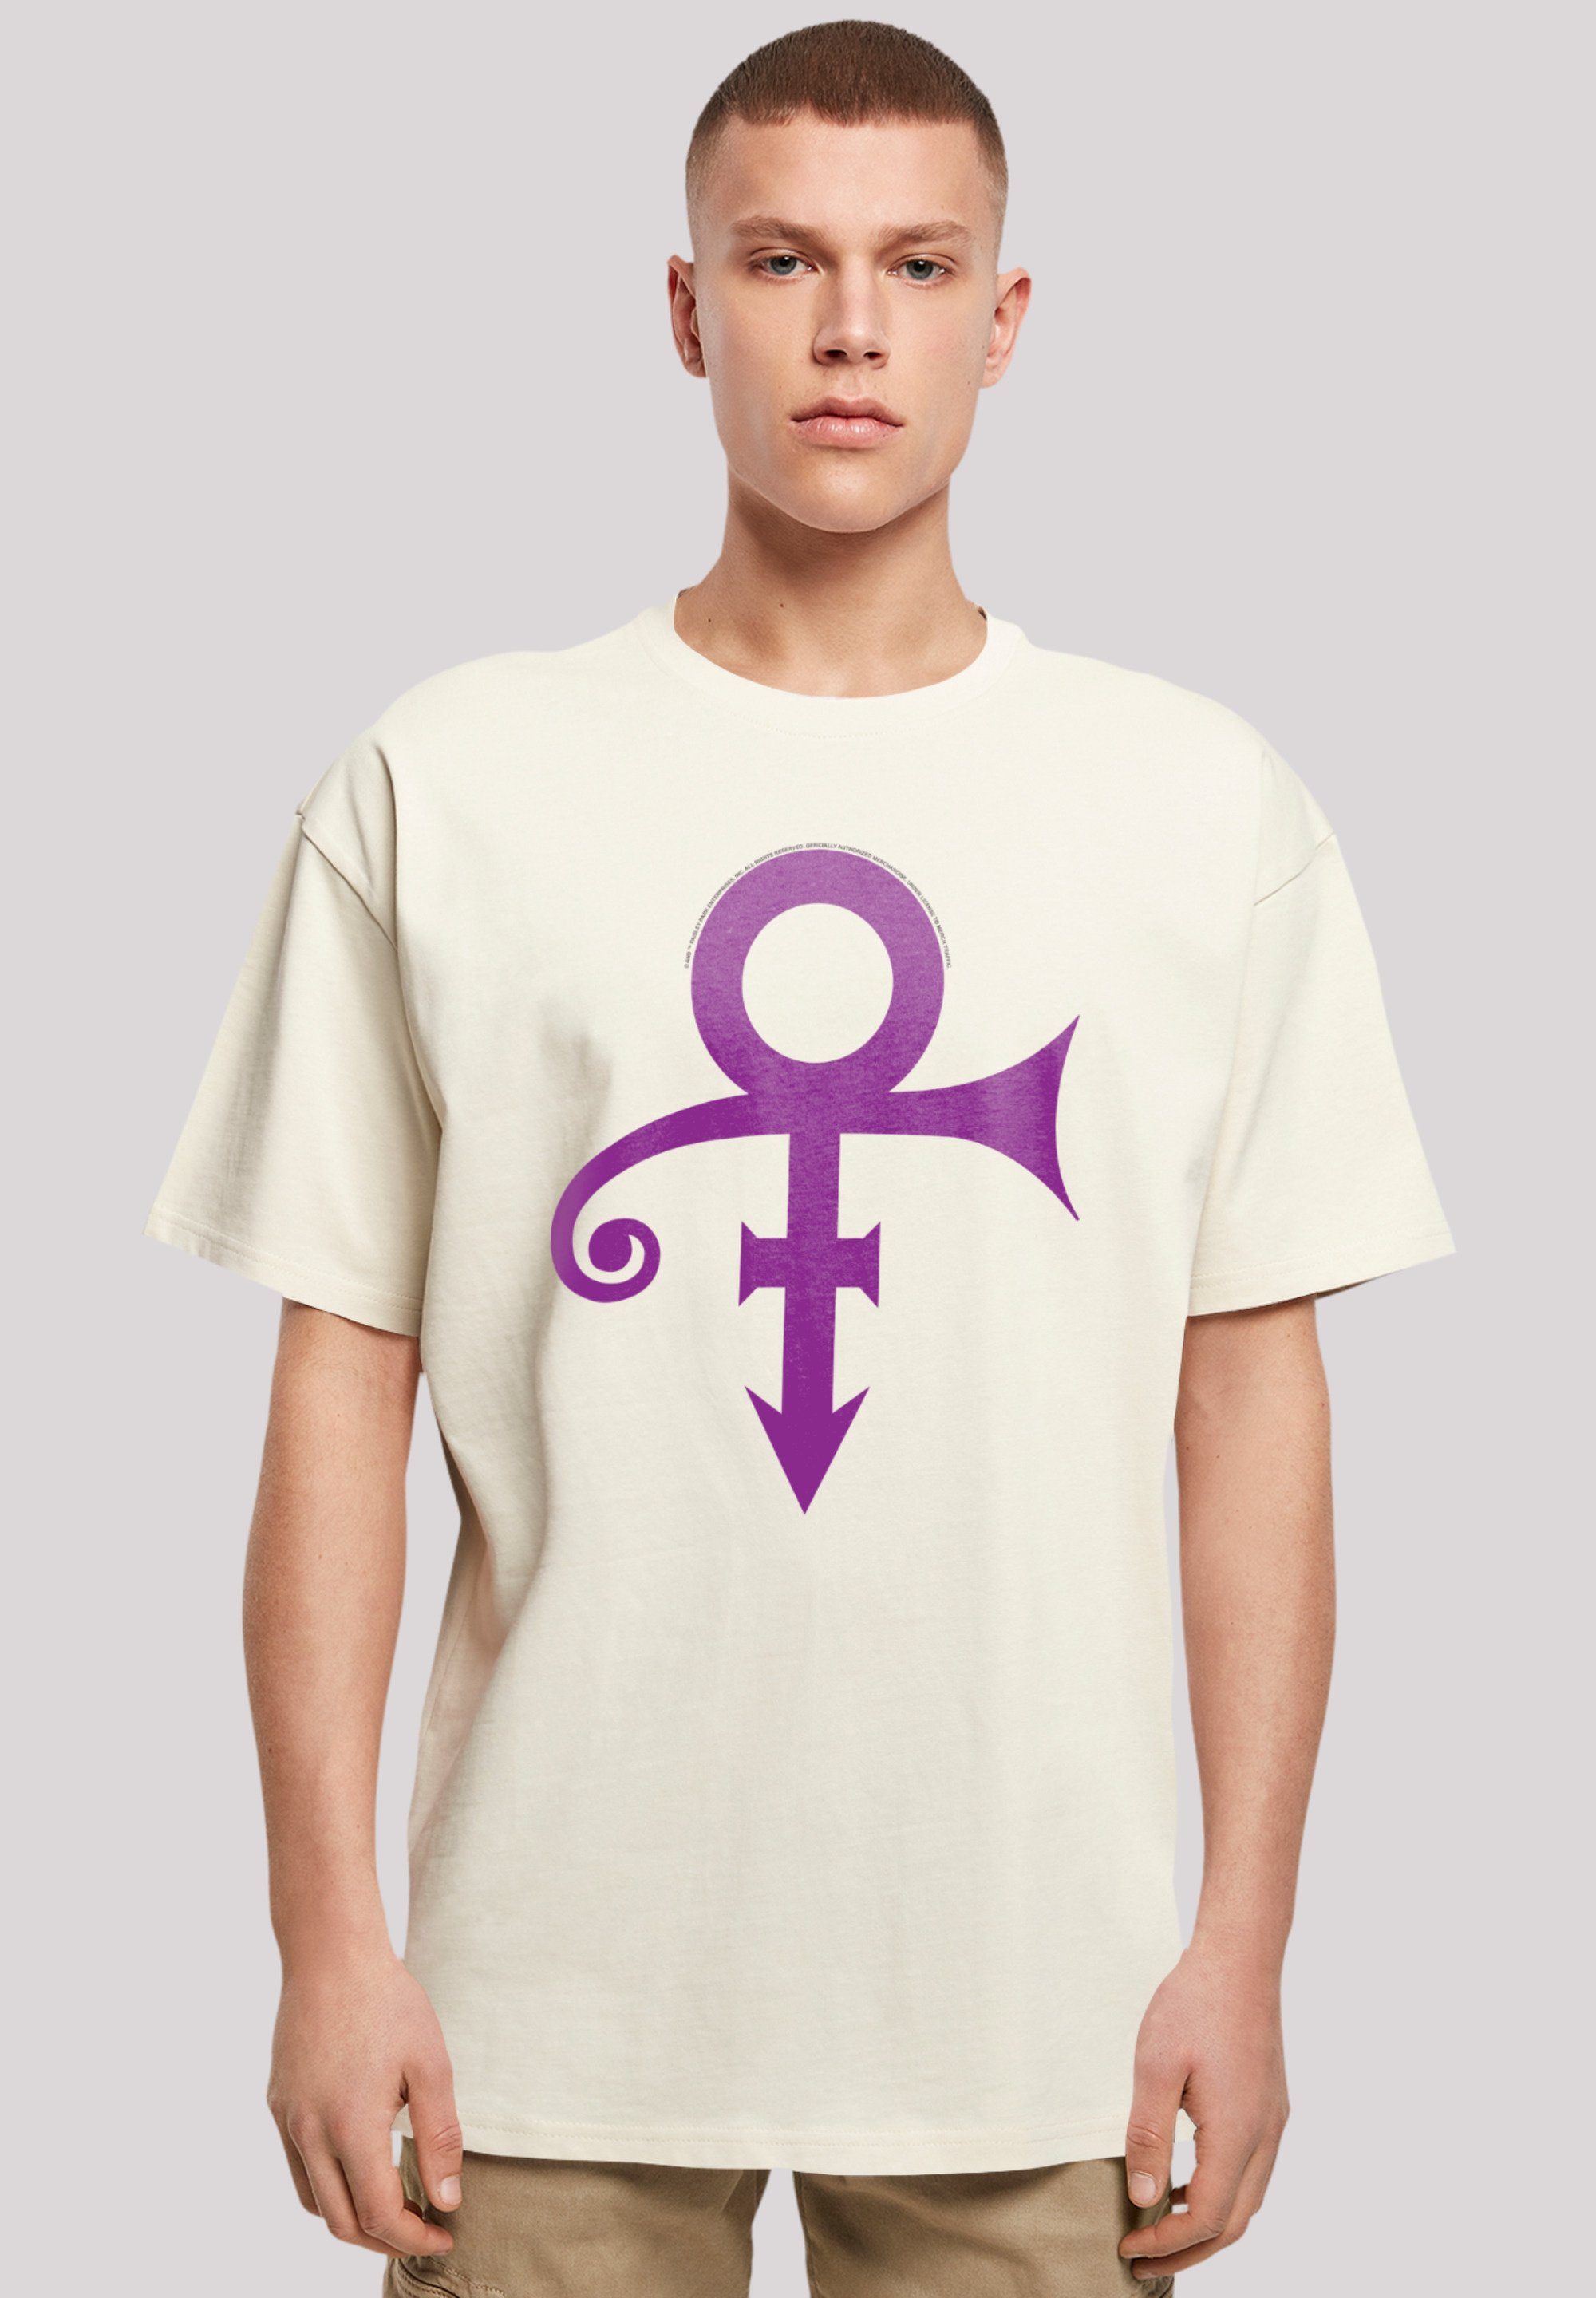 F4NT4STIC T-Shirt Prince Rock-Musik, Musik sand Album Band Qualität, Logo Premium